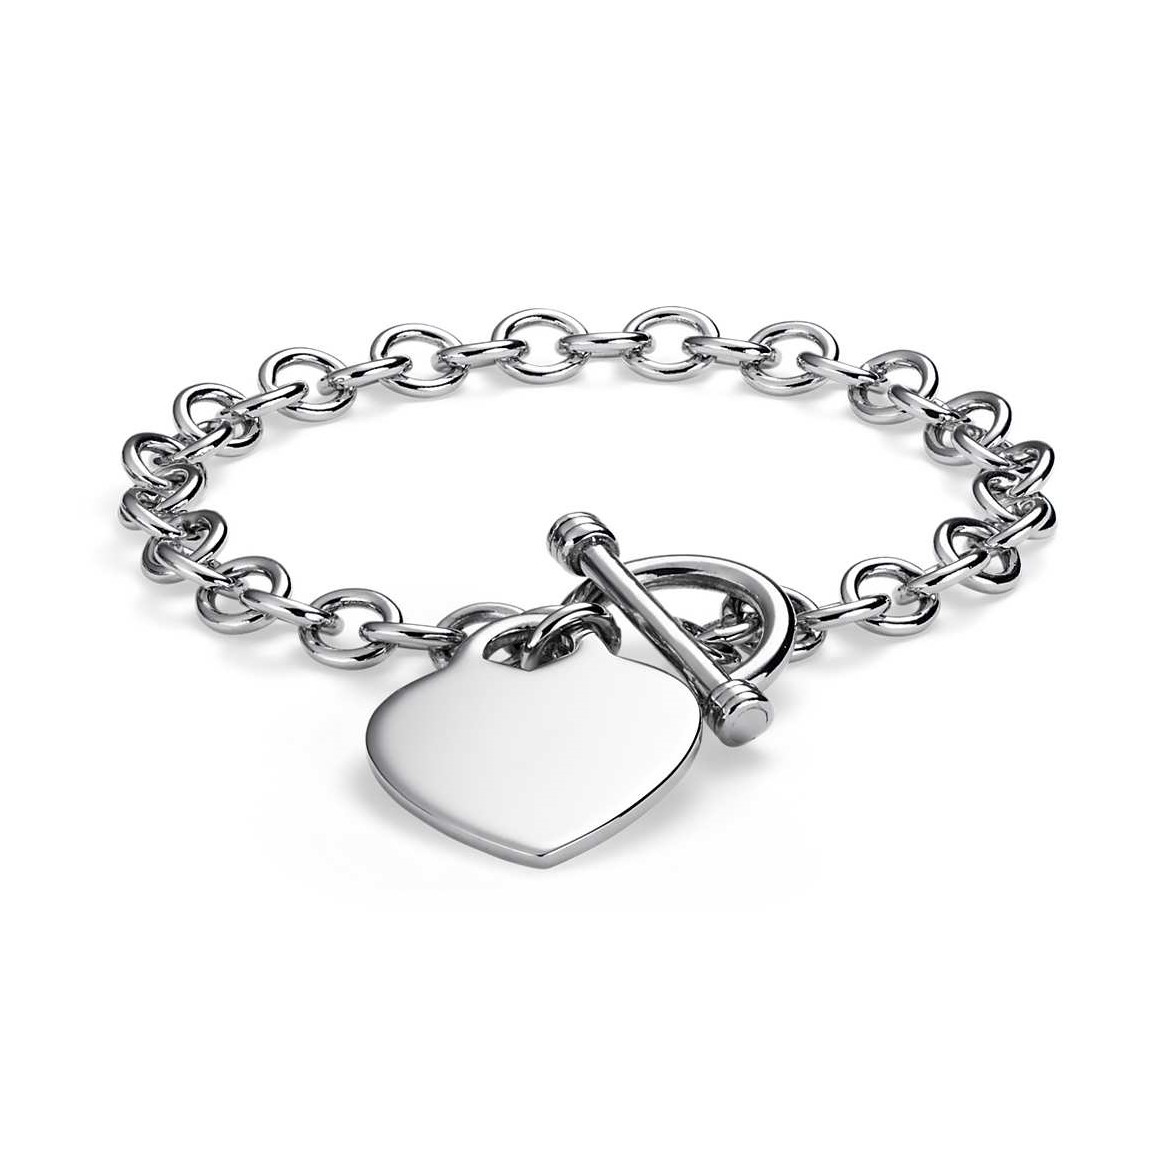 yeidid-international Heart Charm Toggle Bracelet